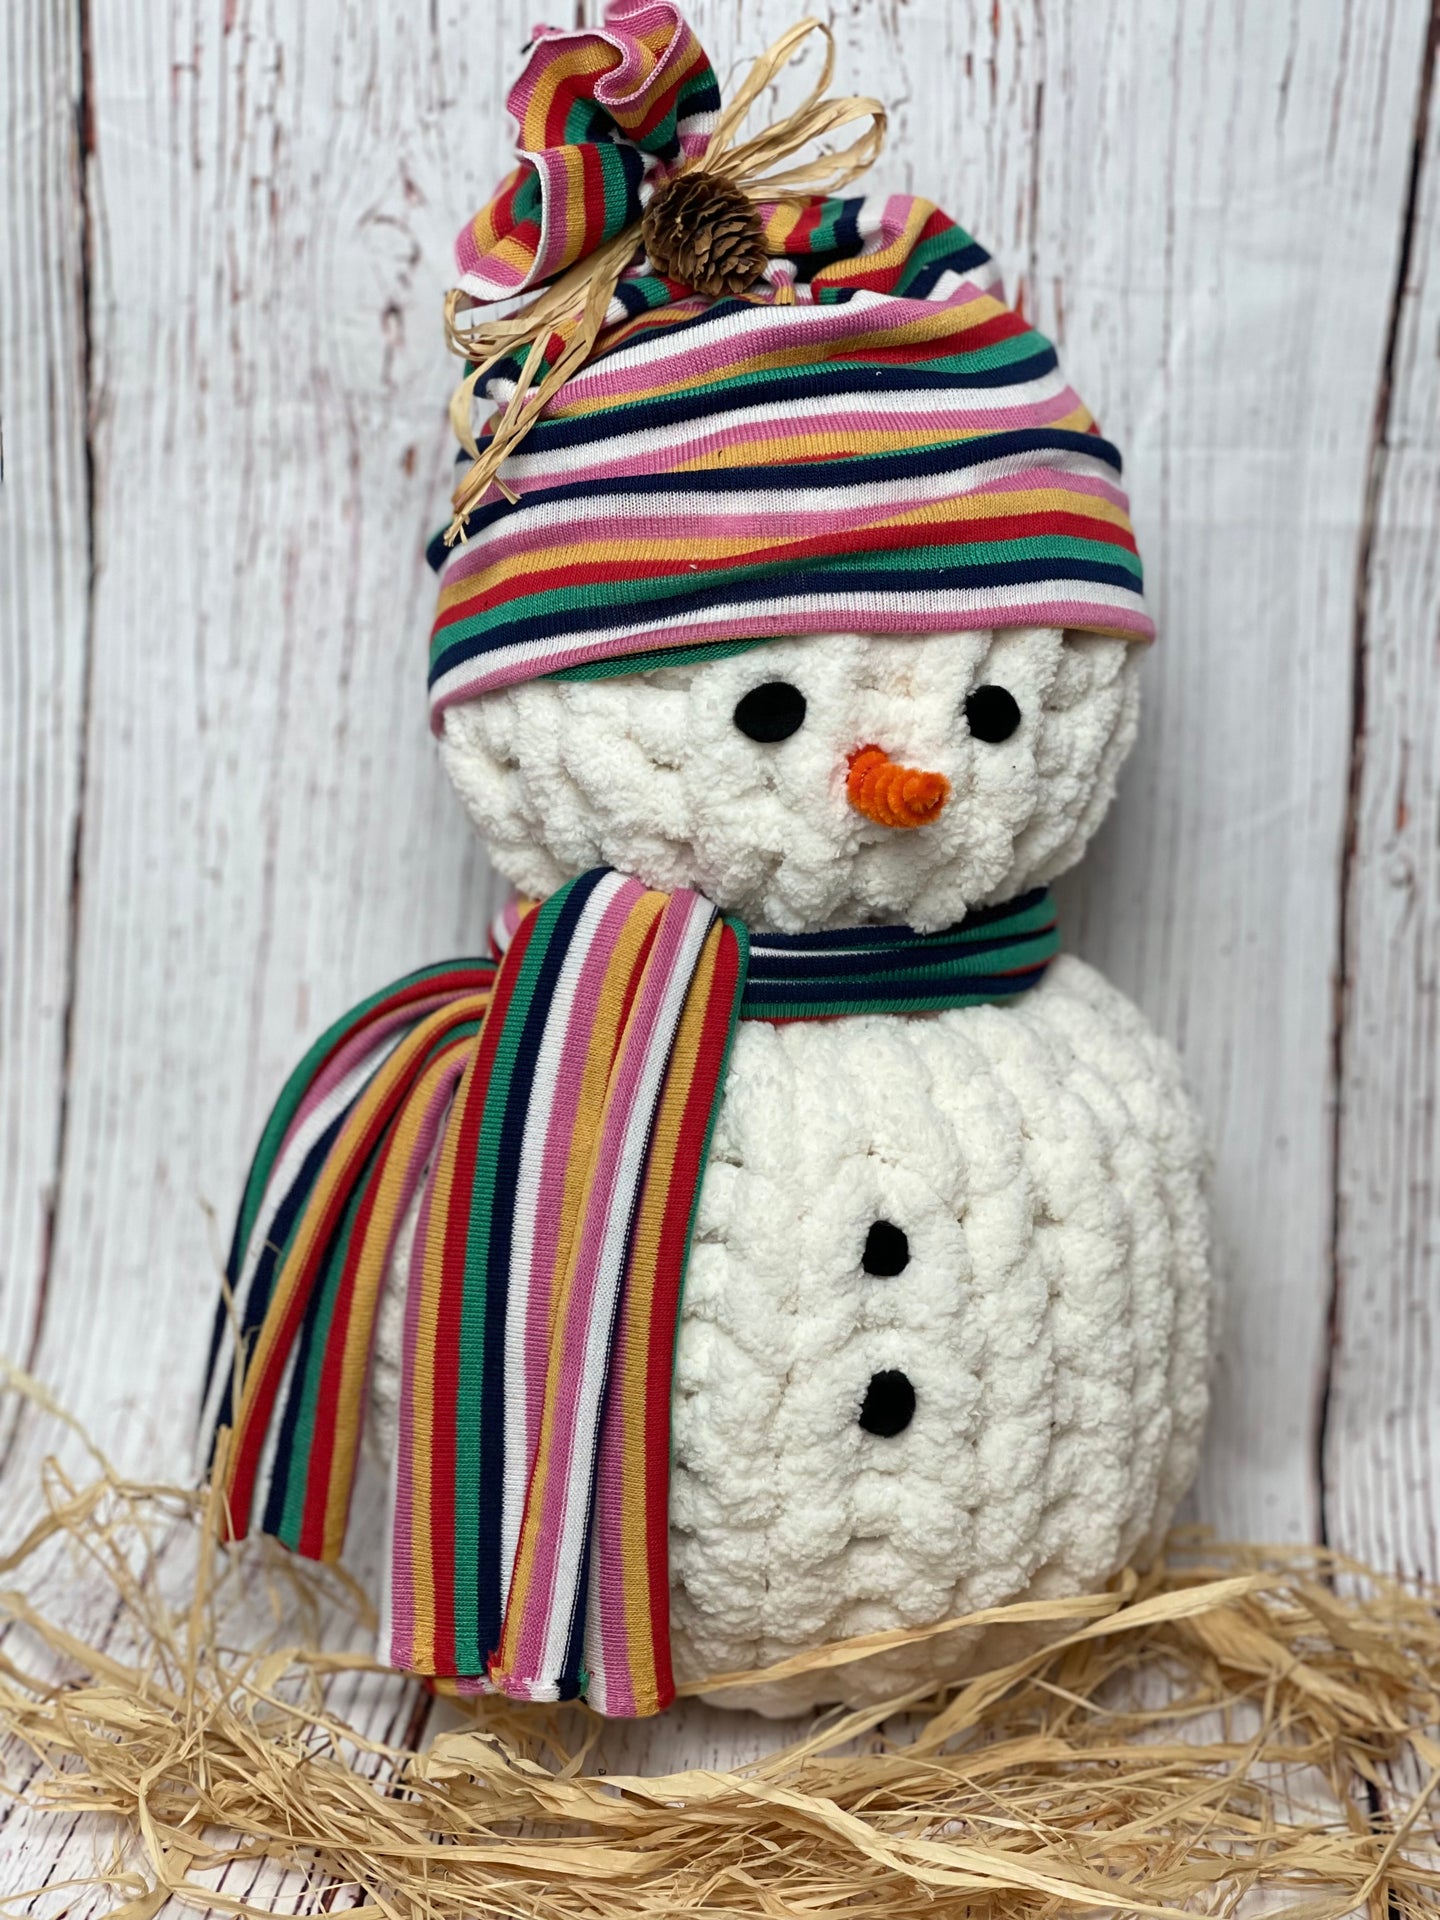 Snowman with Knit Rainbow Cap & Scarf